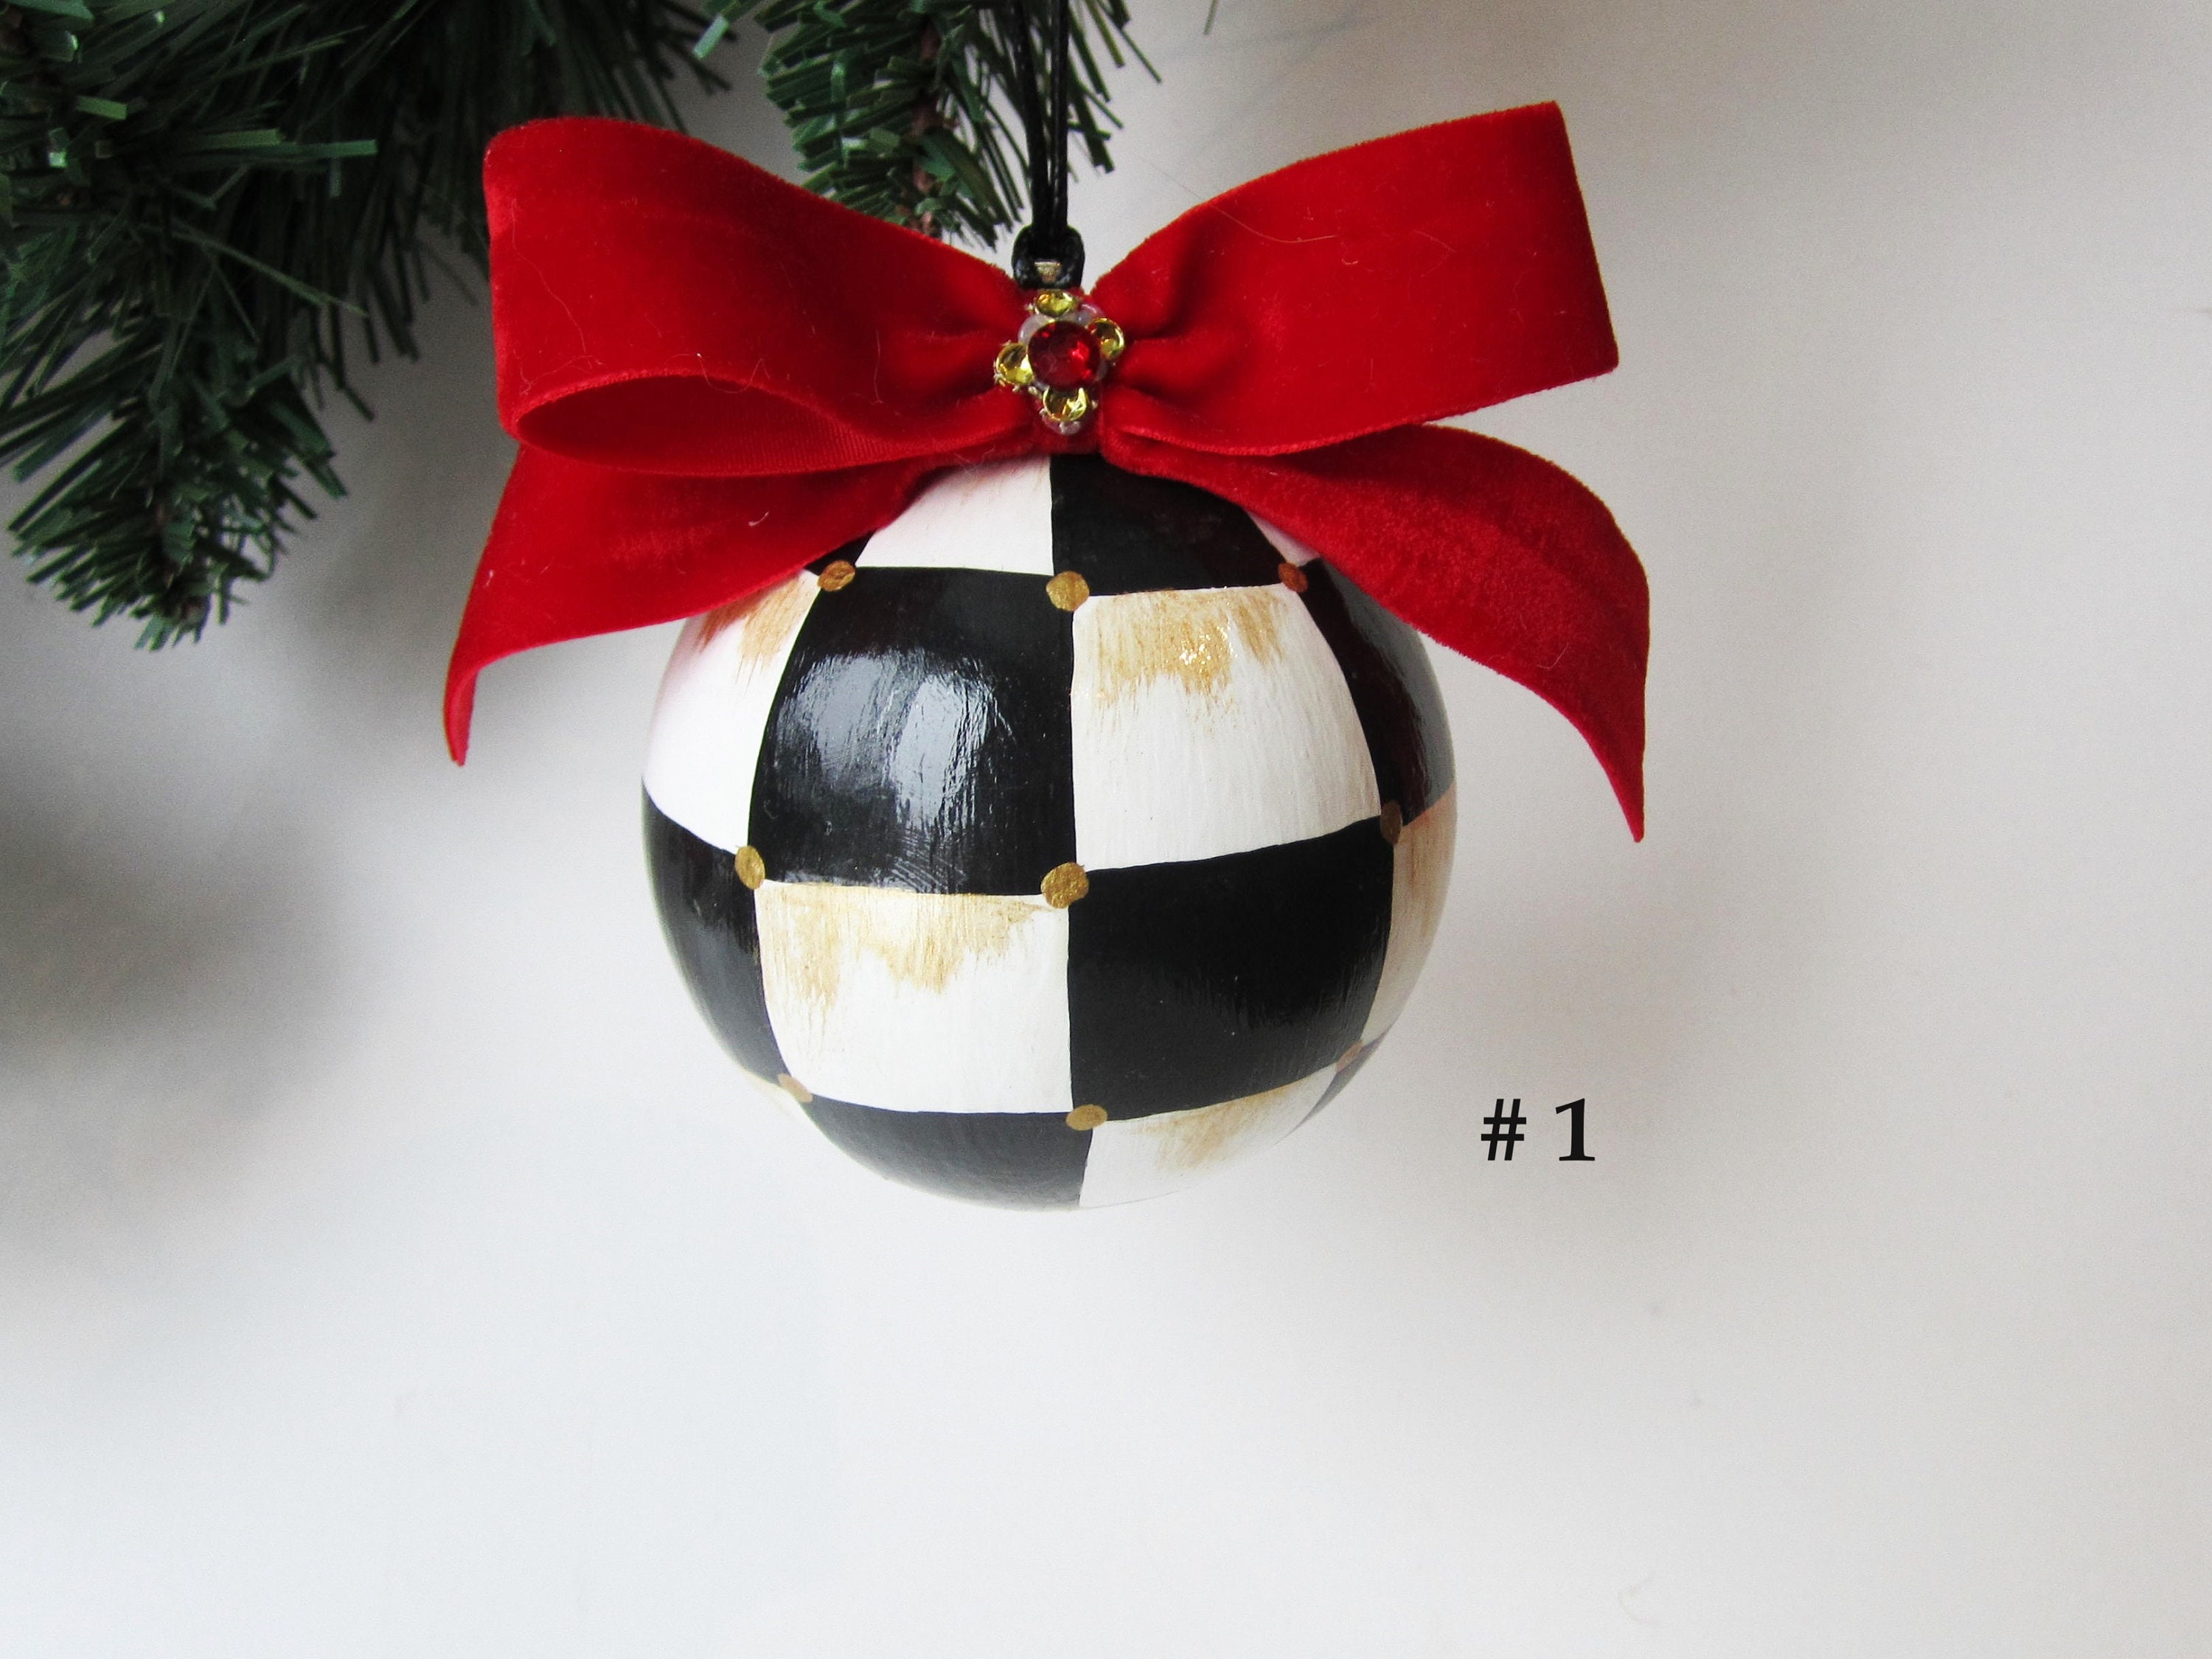 Black and White Buffalo Check, Christmas Tree Ornament, Farmhouse